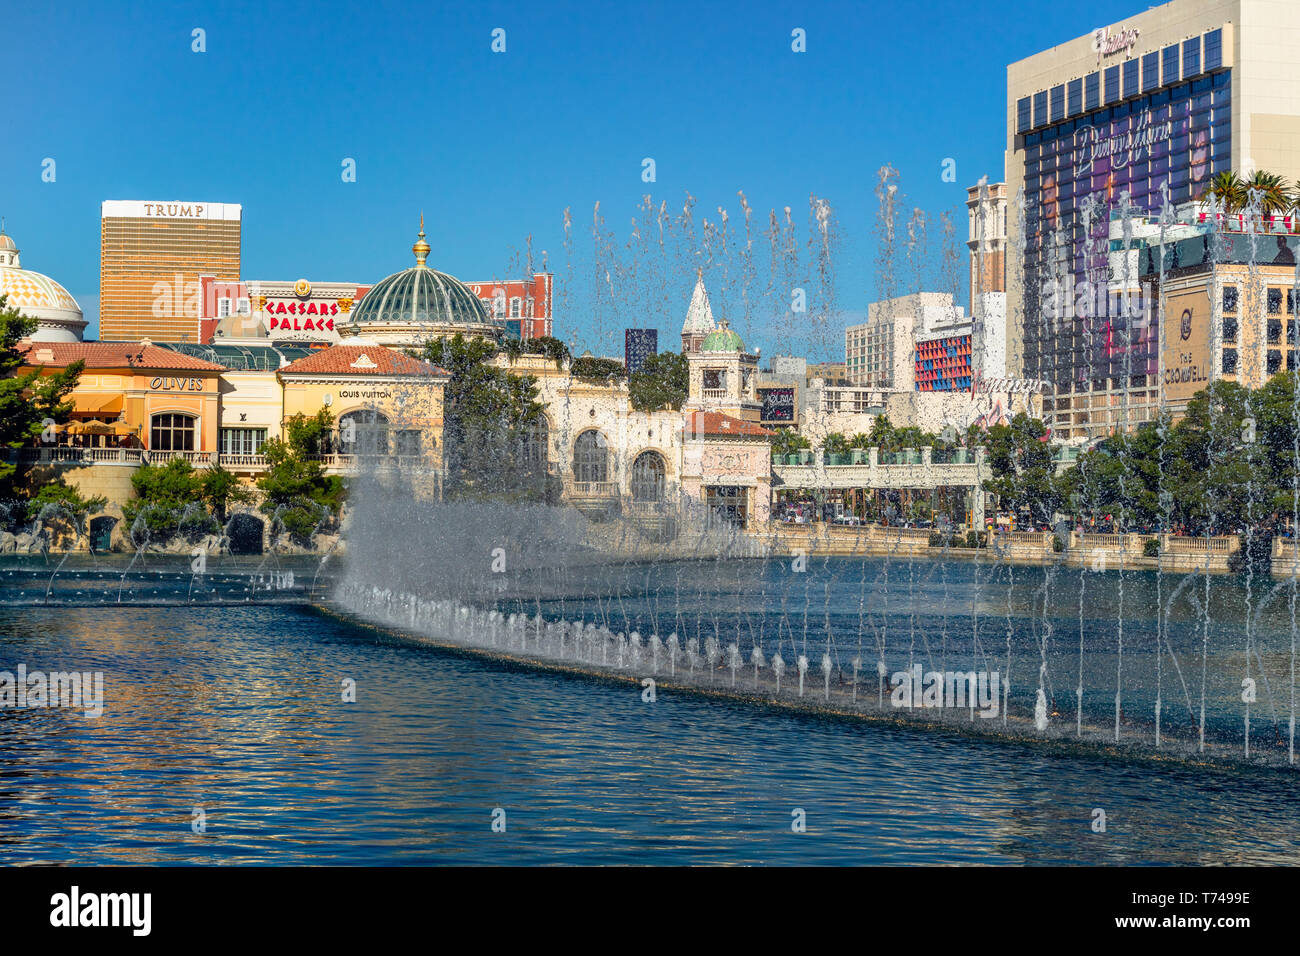 Trump International Hotel, and Flamingo Hotel and Casino, View from Bellagio Fountain, Las Vegas, Nevada, USA, November 19, 2016 Stock Photo